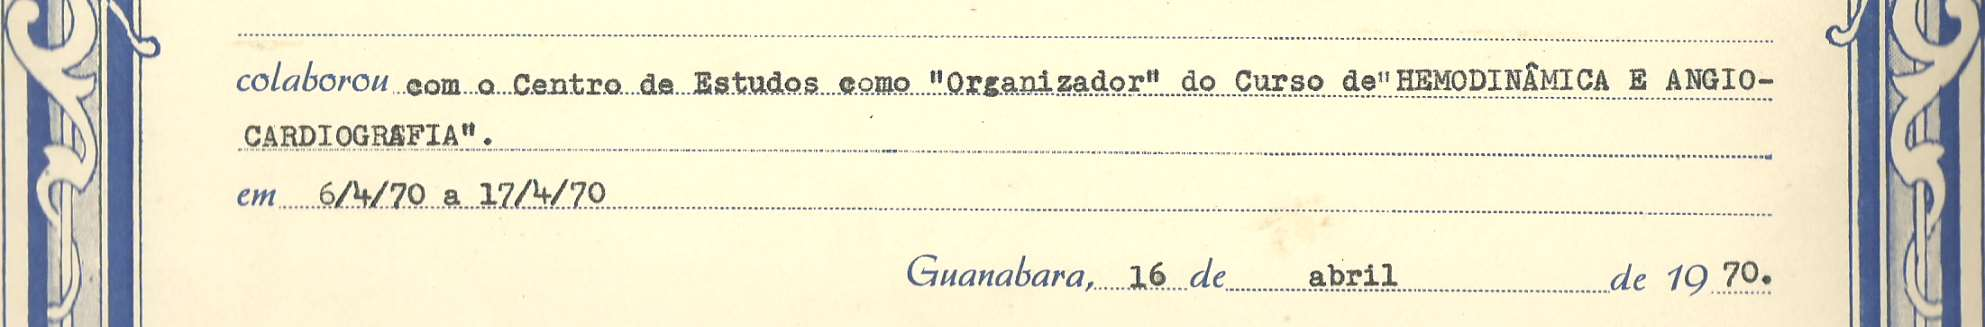 1970:Certificado - Estado da Guanabara Instituto Estadual de Cardiologia